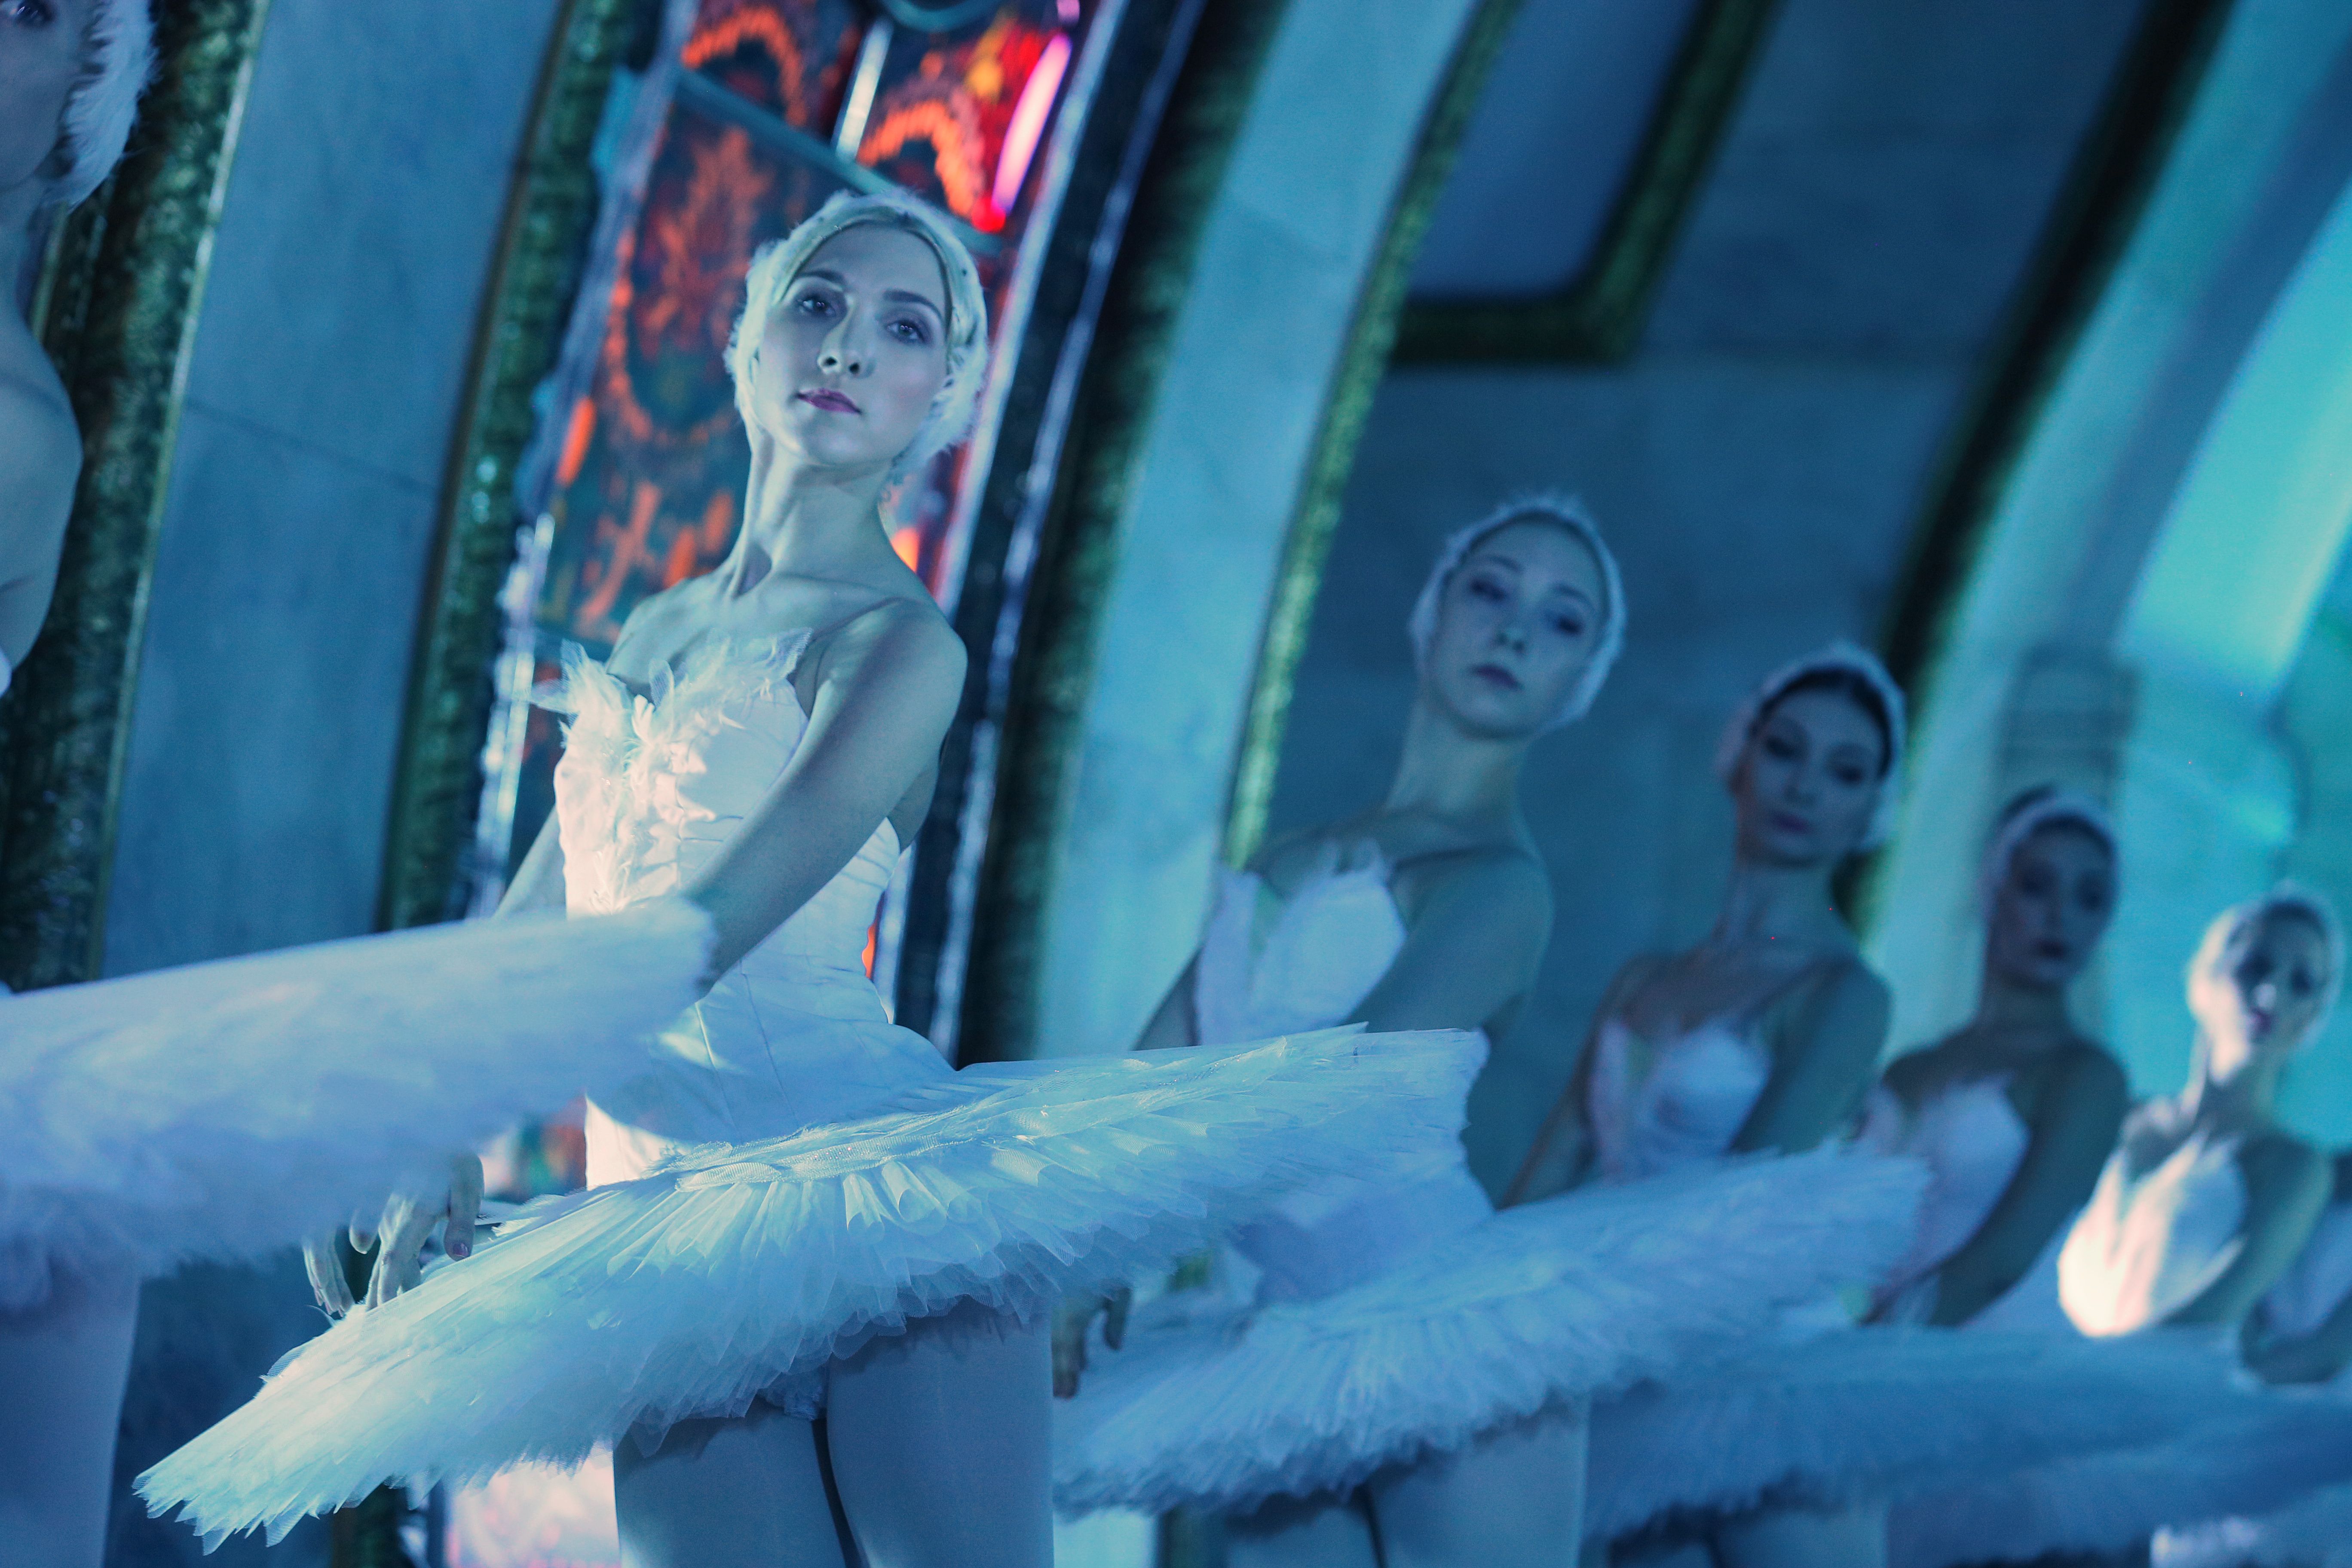 Особенности балета обсудят в Минвнешторге. Фото: Антон Гердо, «Вечерняя Москва»